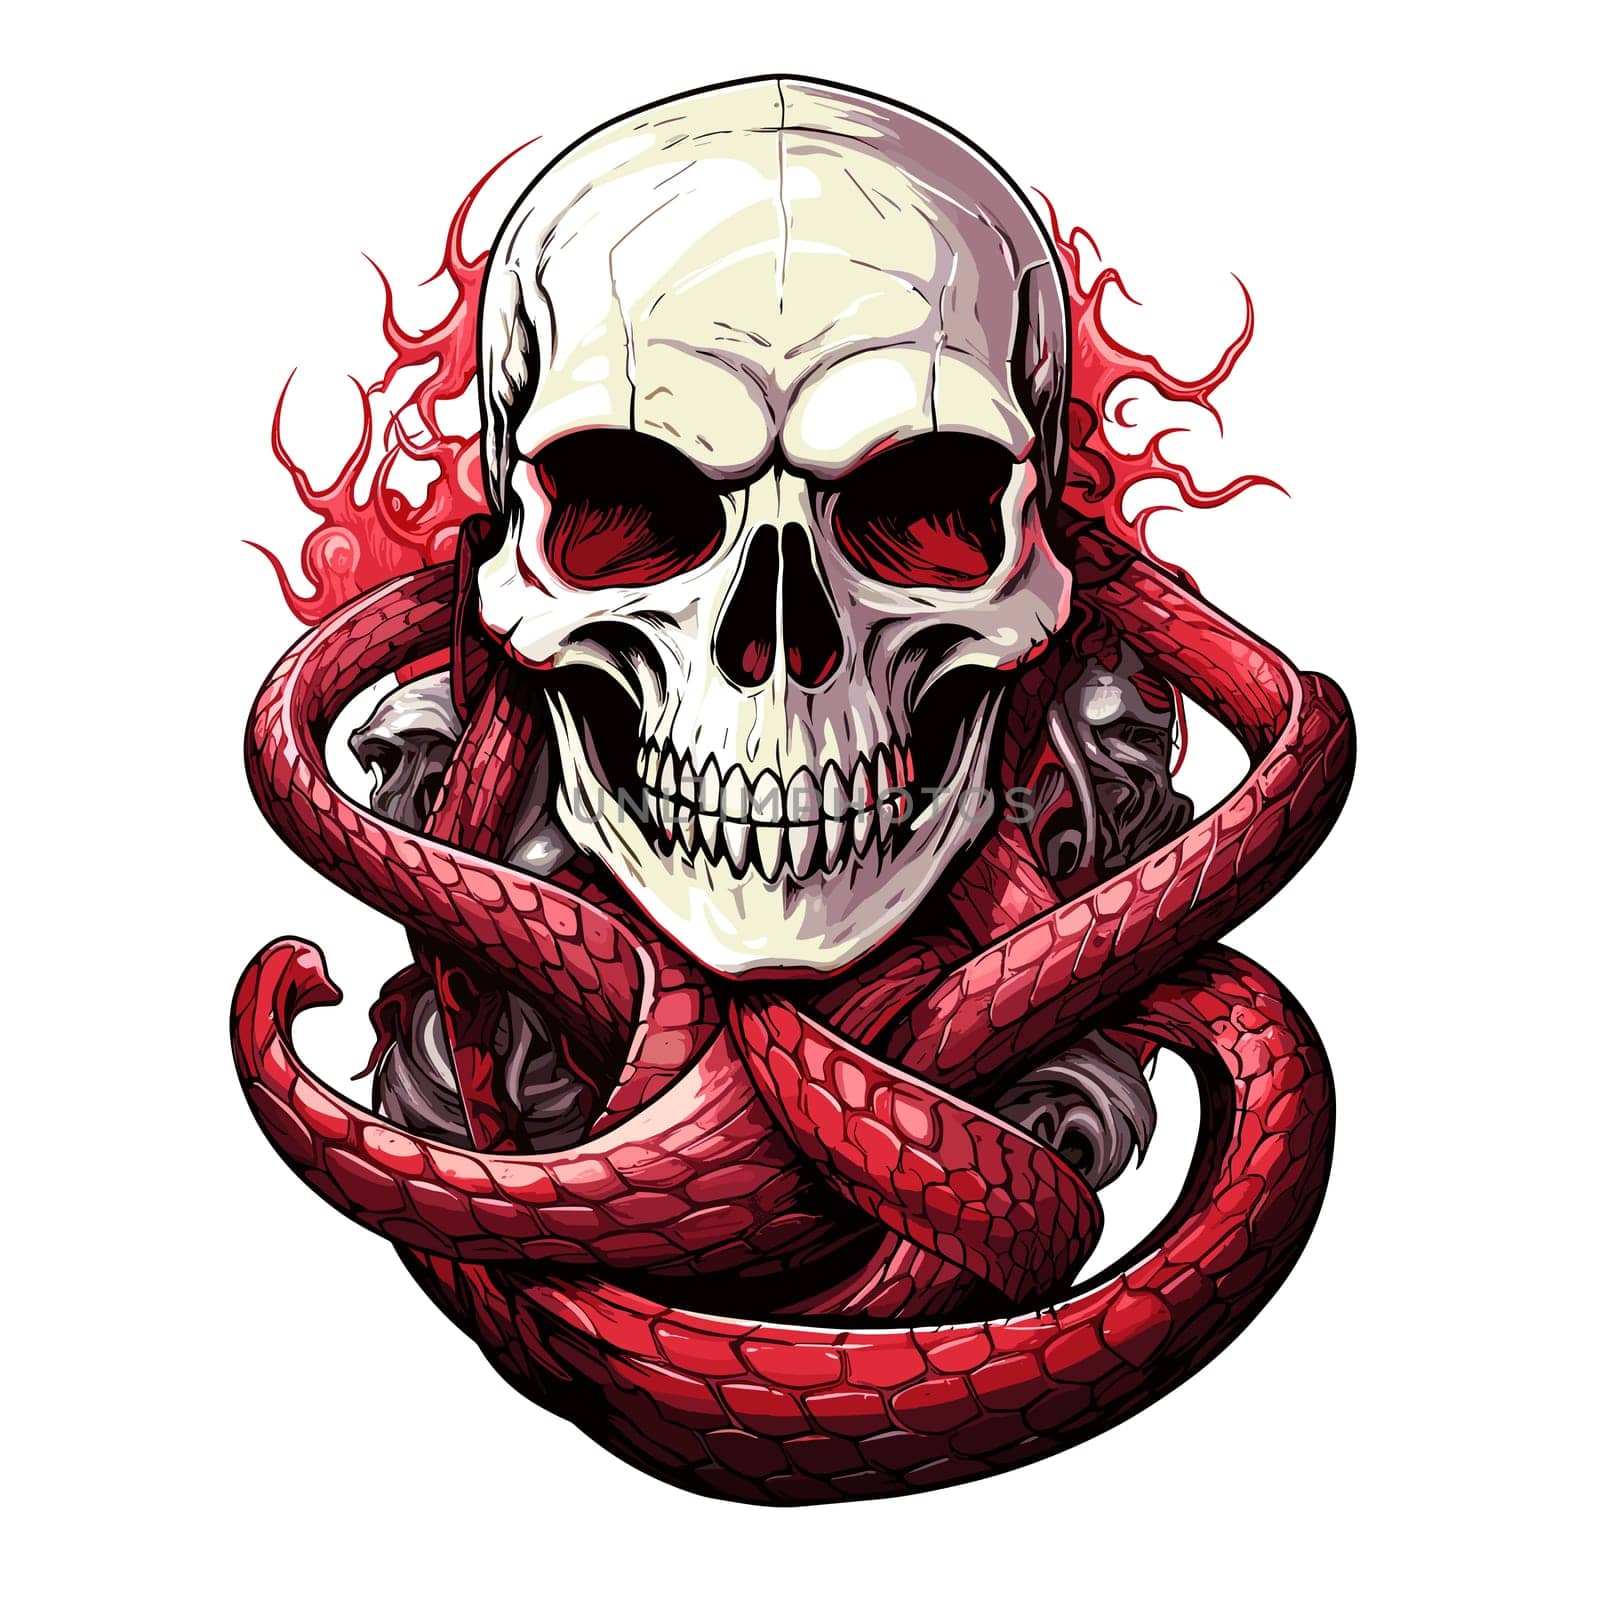 A devil's skull with a snake. Mystical illustration  by palinchak